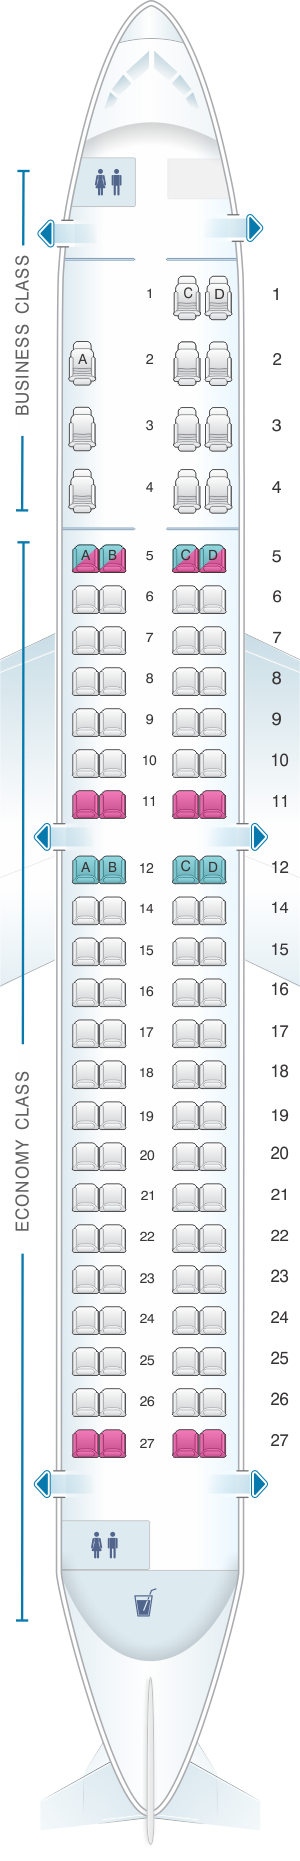 mapa de assentos boeing 777 aeromexico